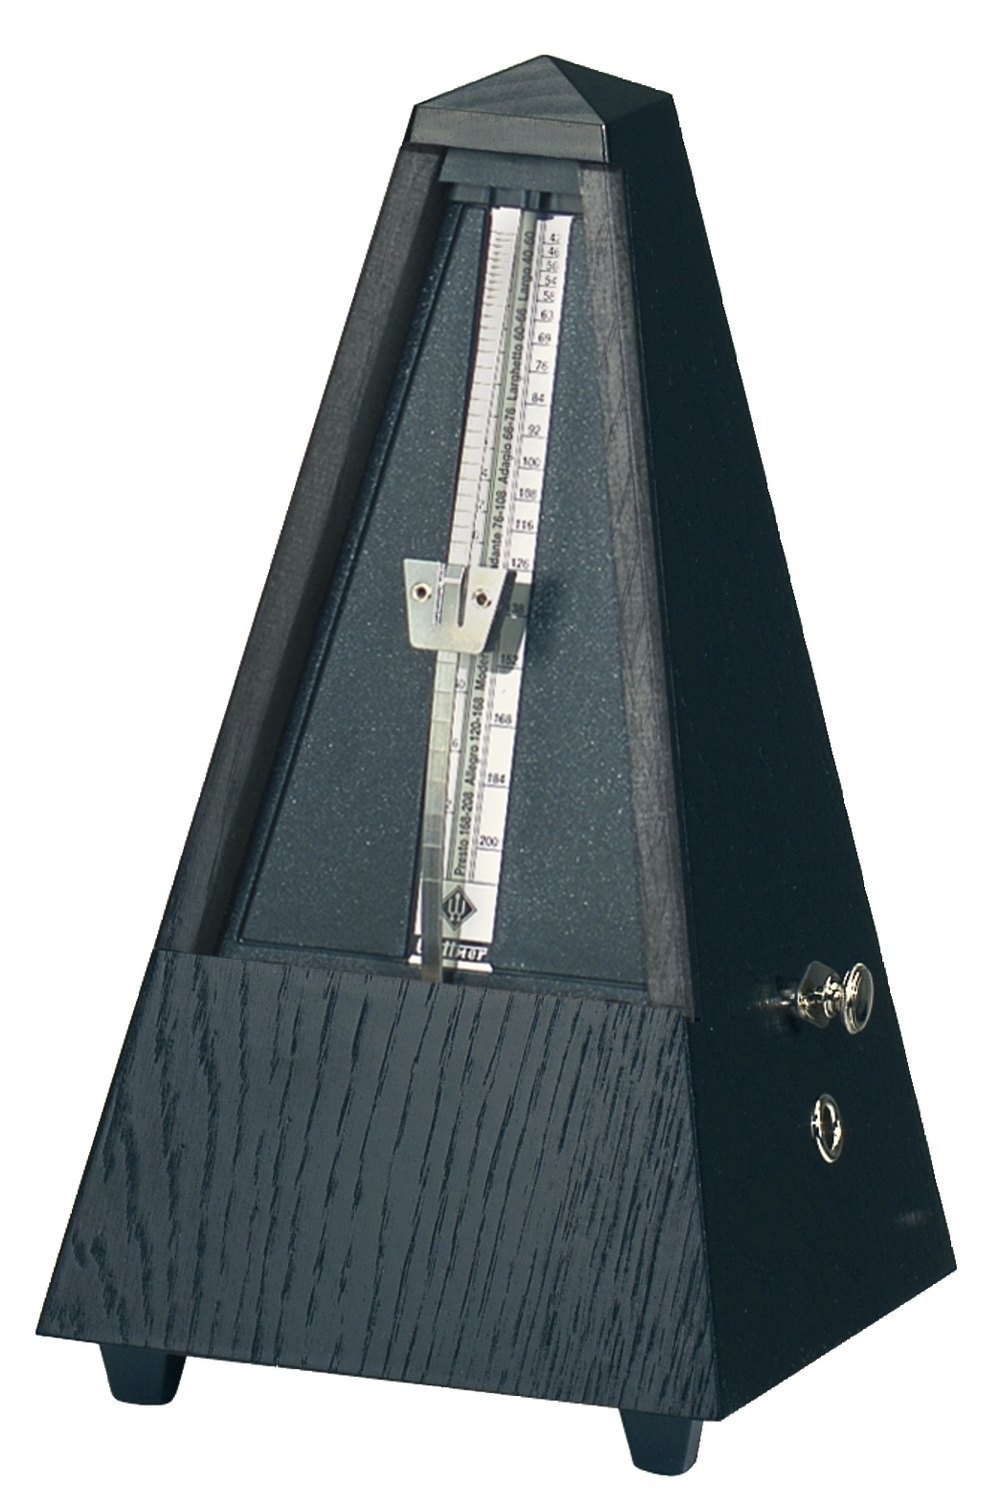 Wittner Taktell Pyramidenform, Holzgehäuse mit Glocke